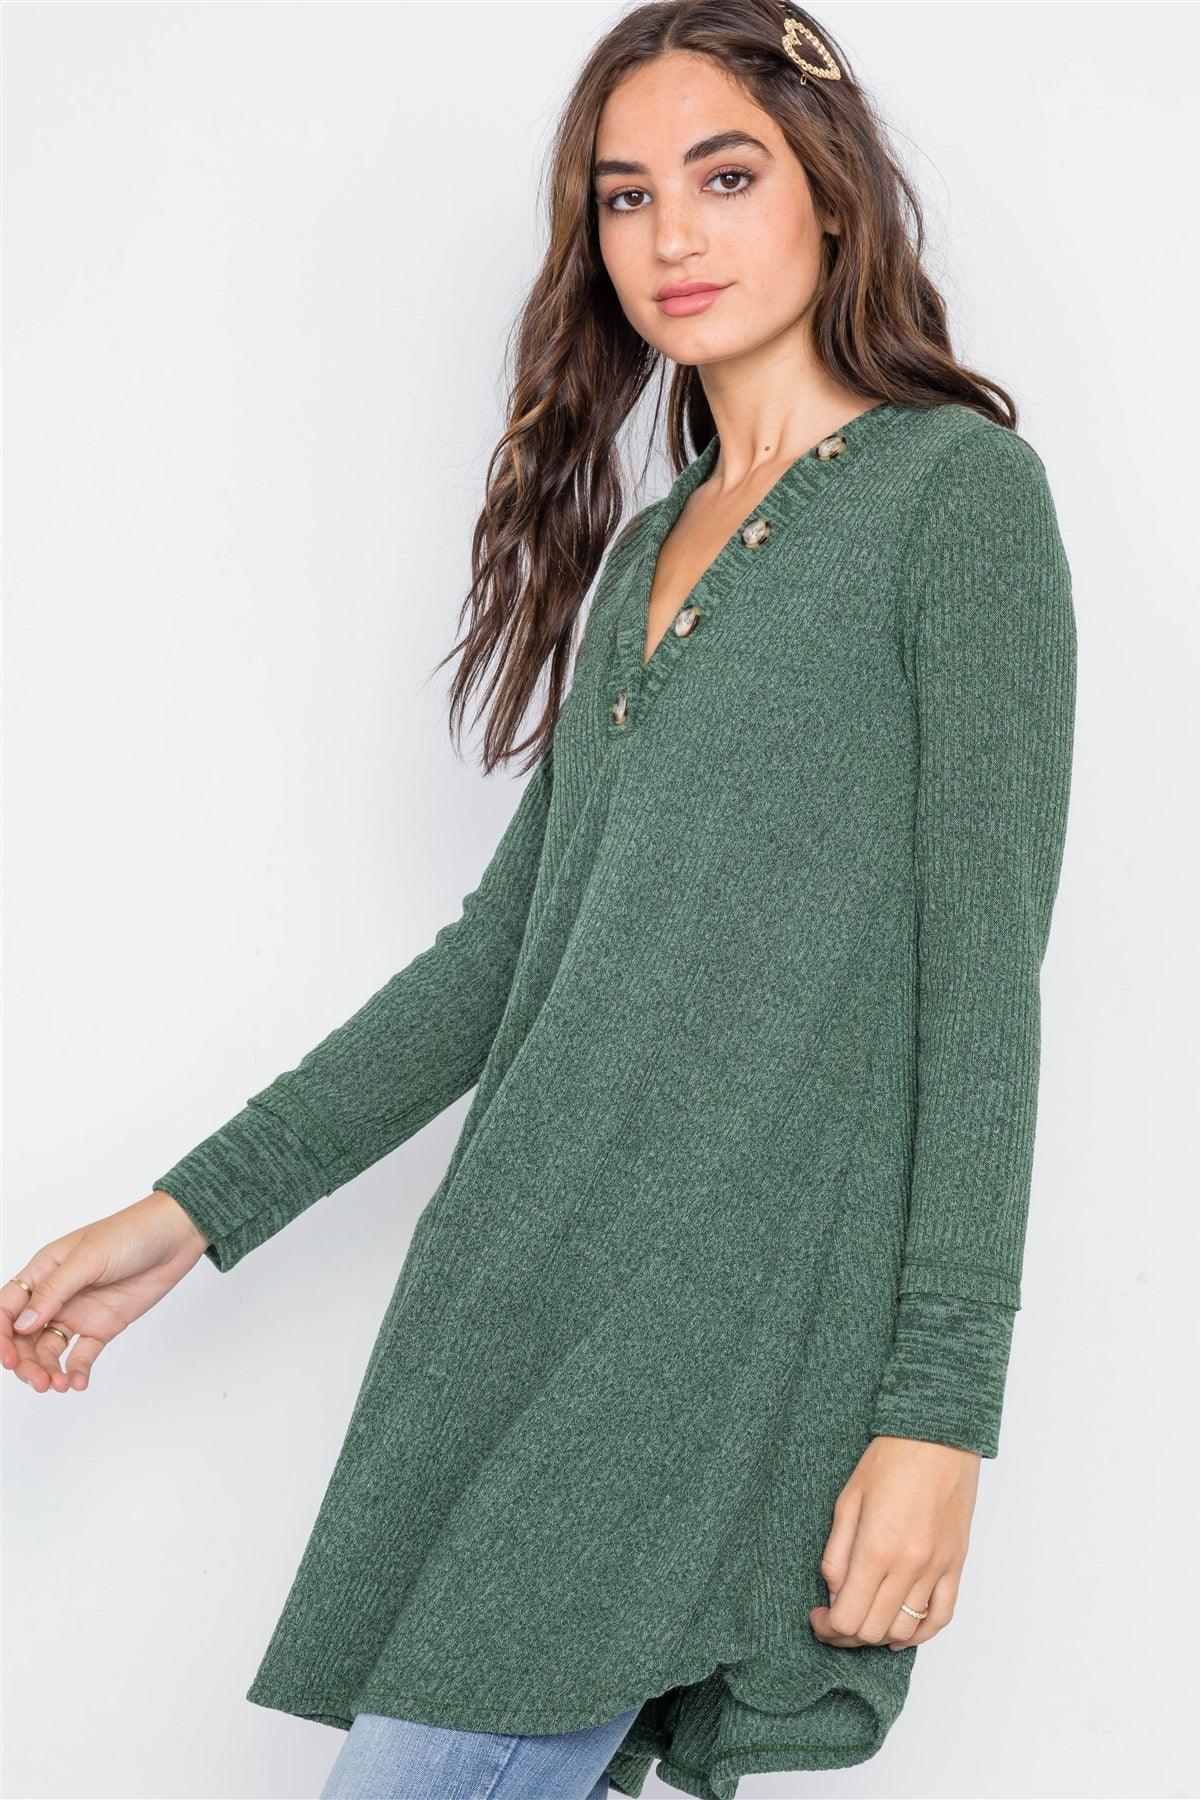 Hunter Green Knit Long Sleeve Sweater Dress /2-2